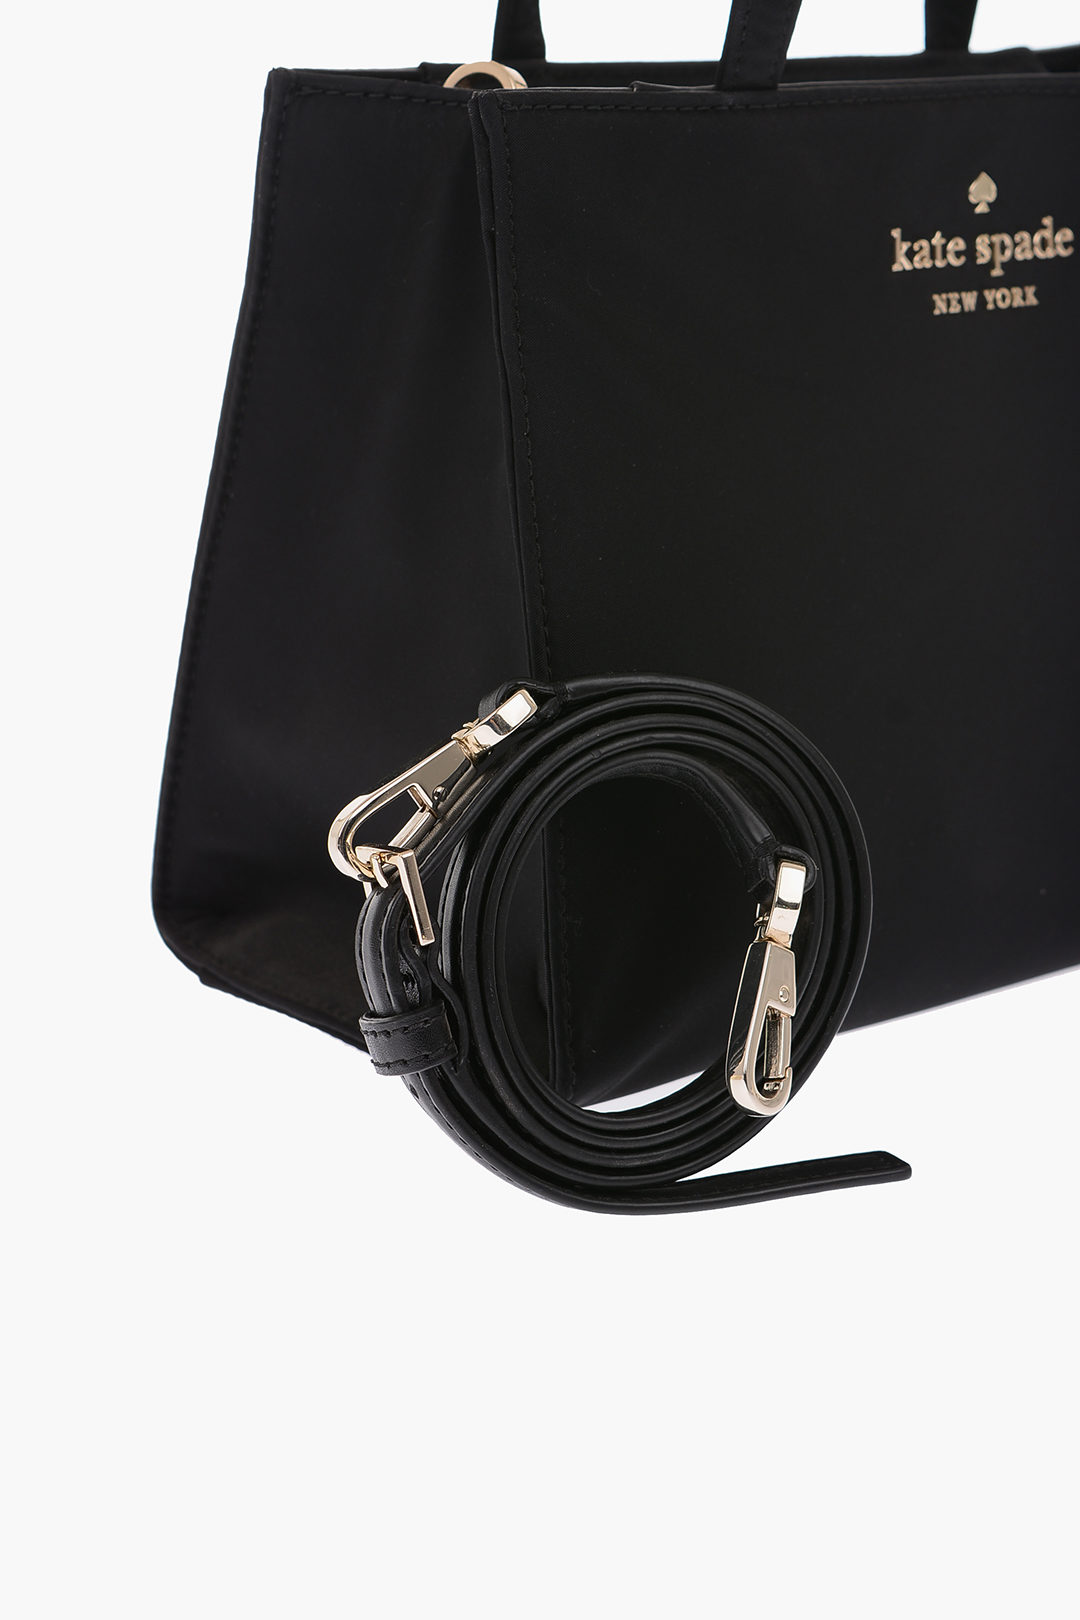 Kate Spade - Authenticated Handbag - Cloth Black for Women, Very Good Condition